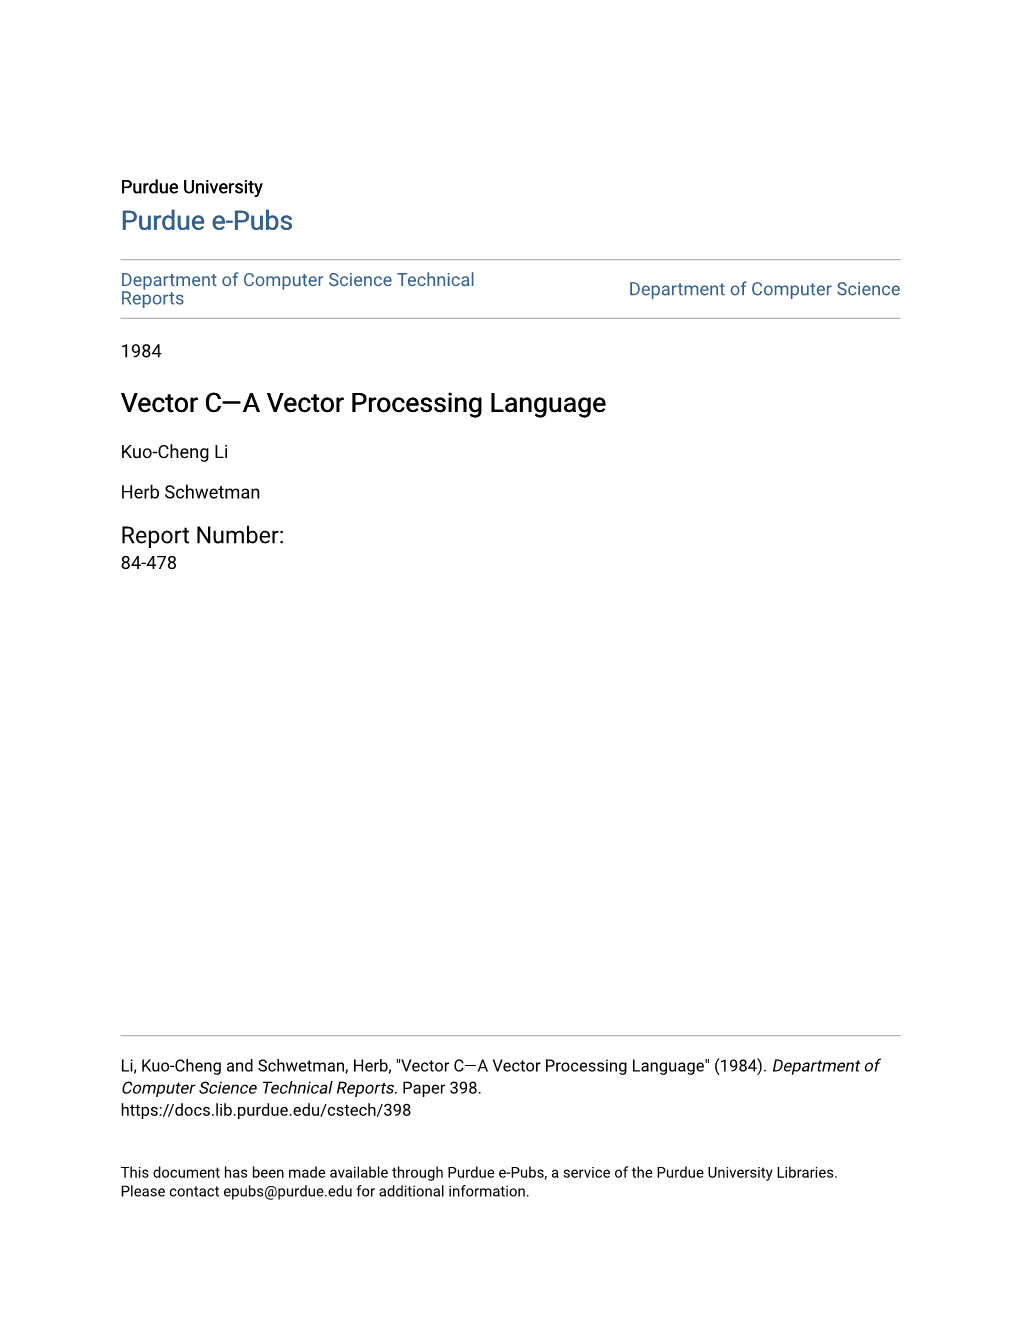 Vector Câ•Fla Vector Processing Language